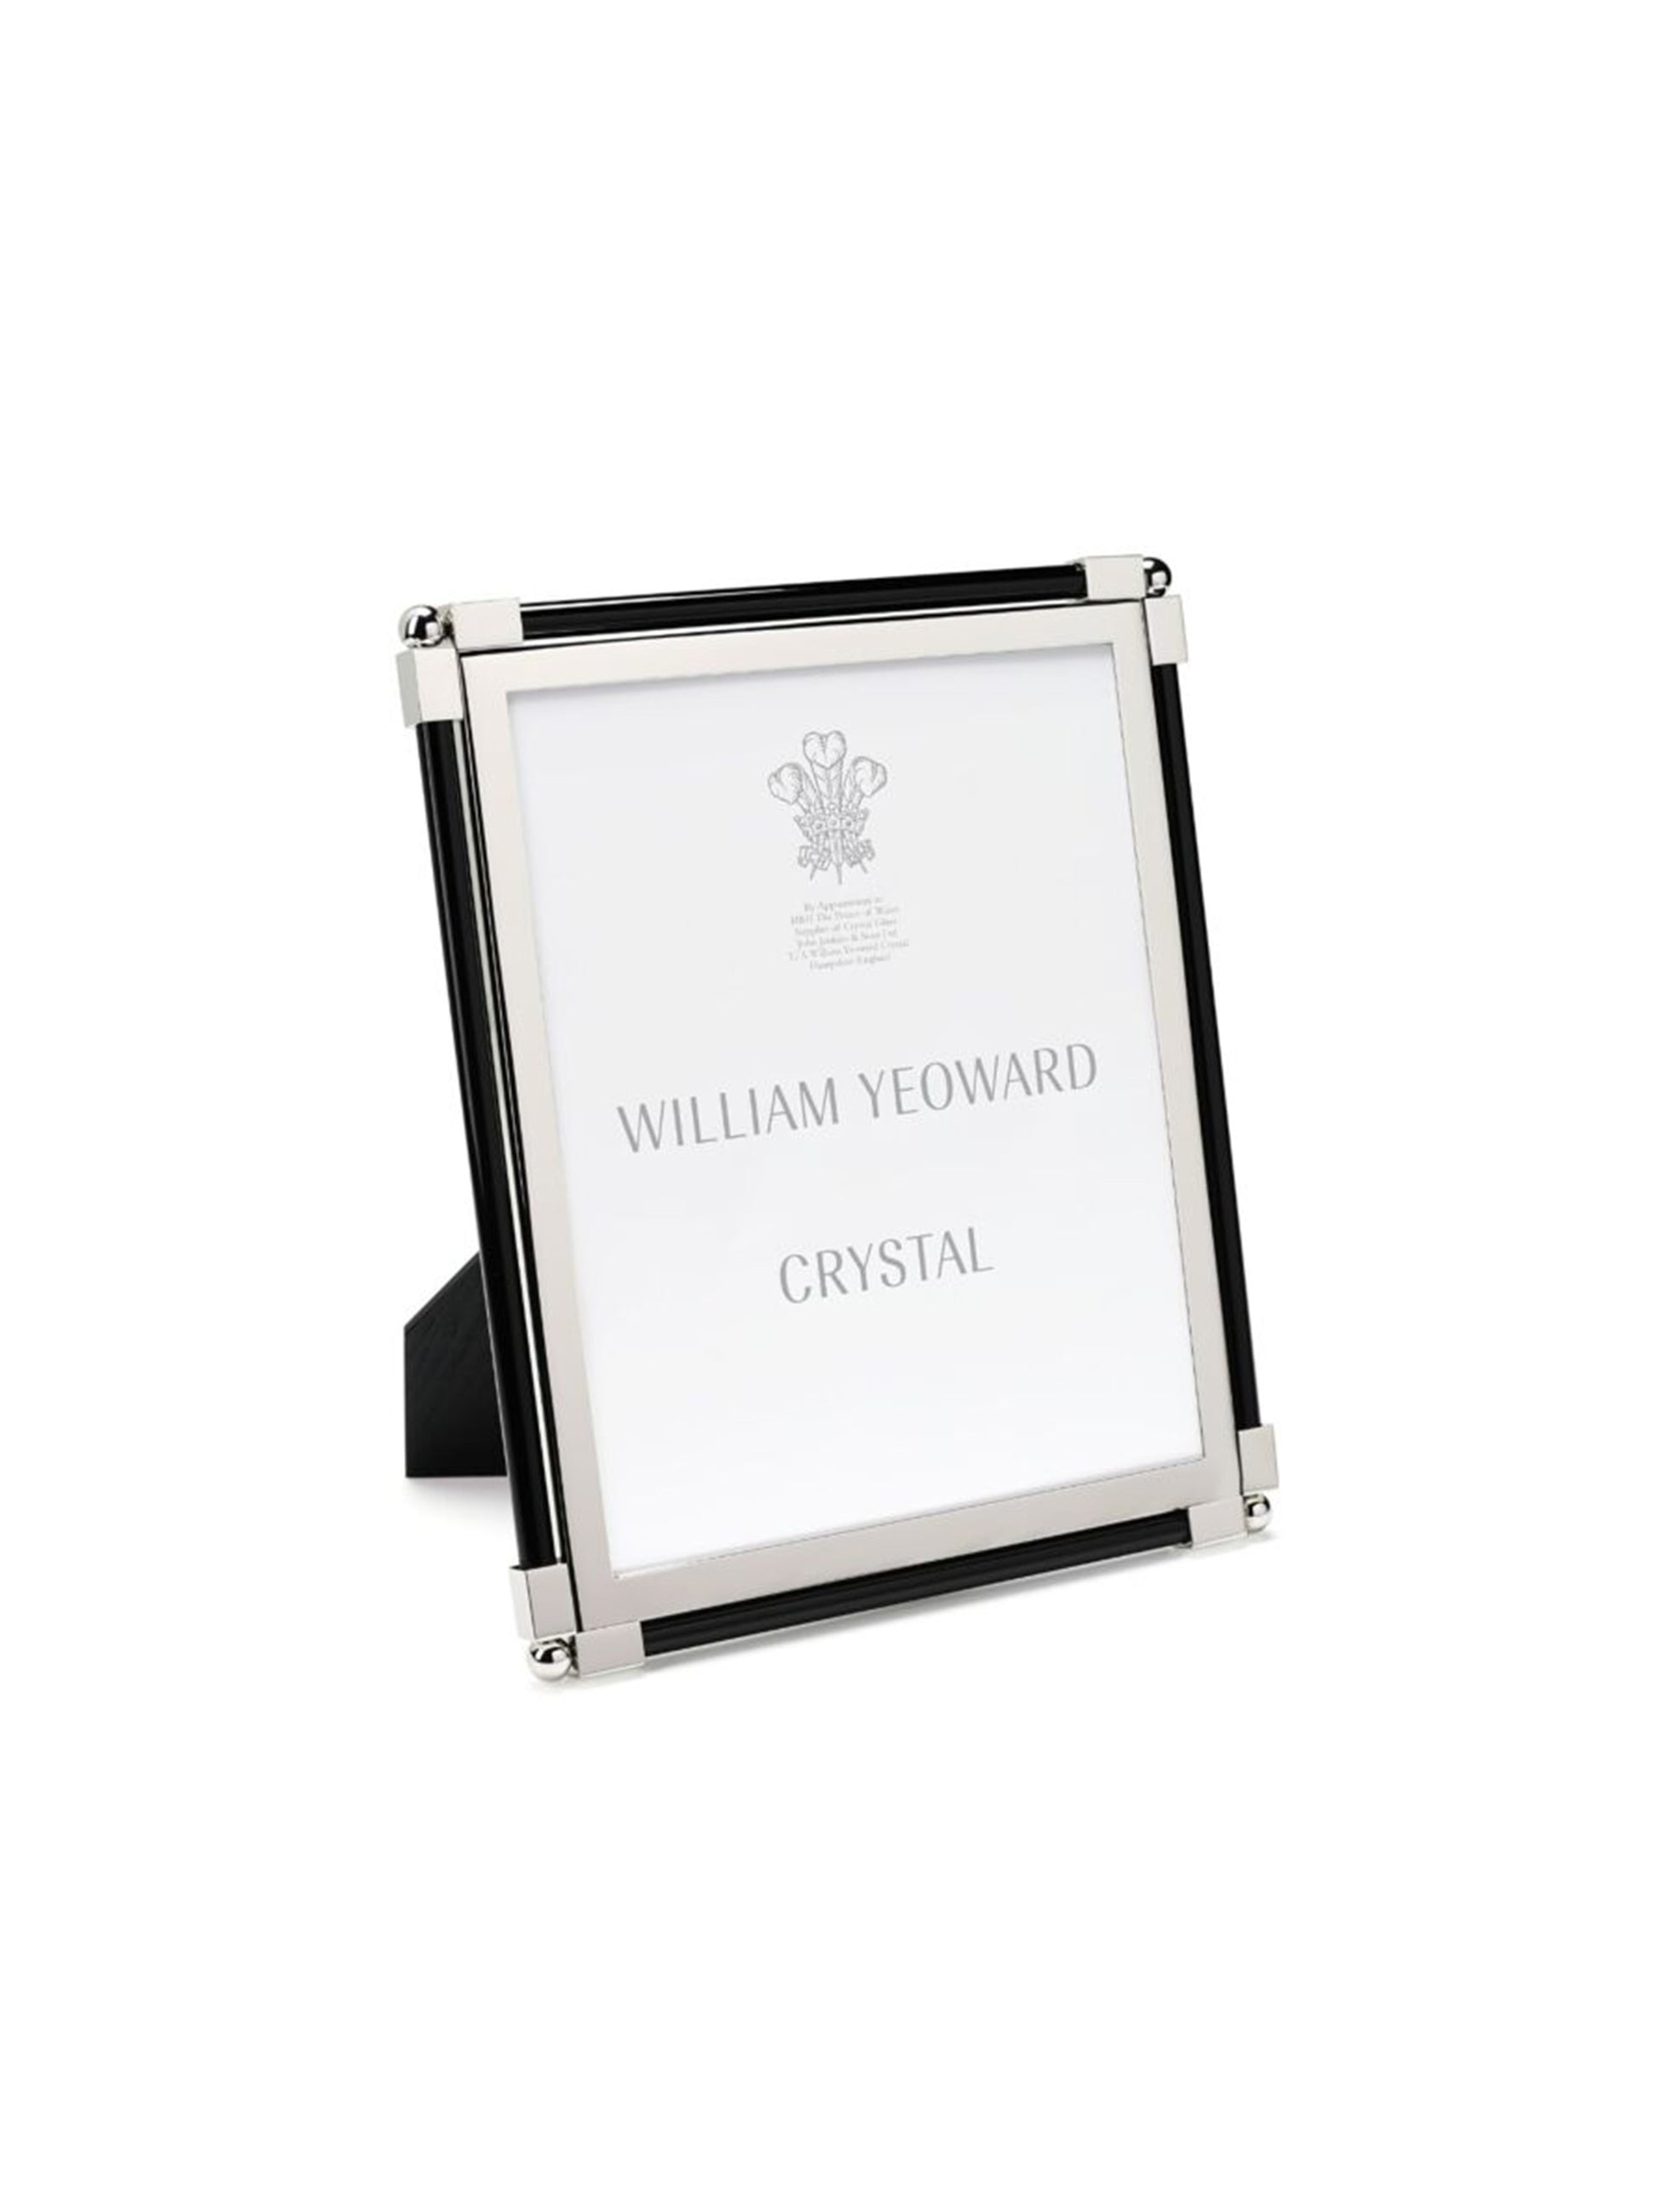 William Yeoward Crystal Classic Black Photo Frame 8 x 10 Weston Table